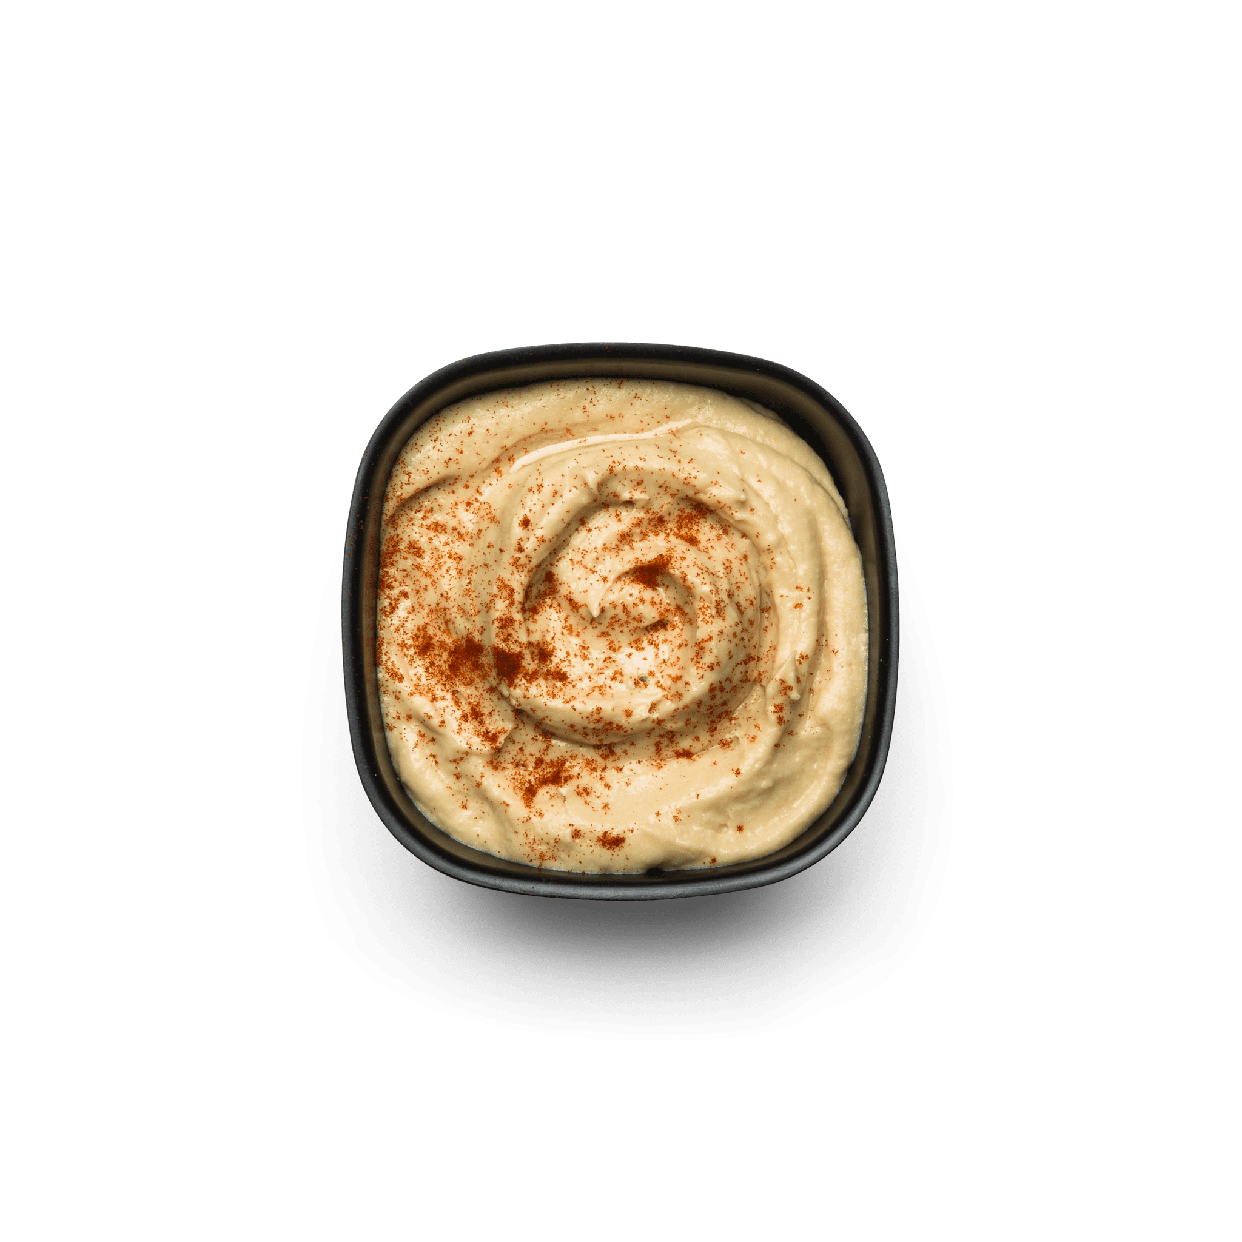 Hummus PNG Image